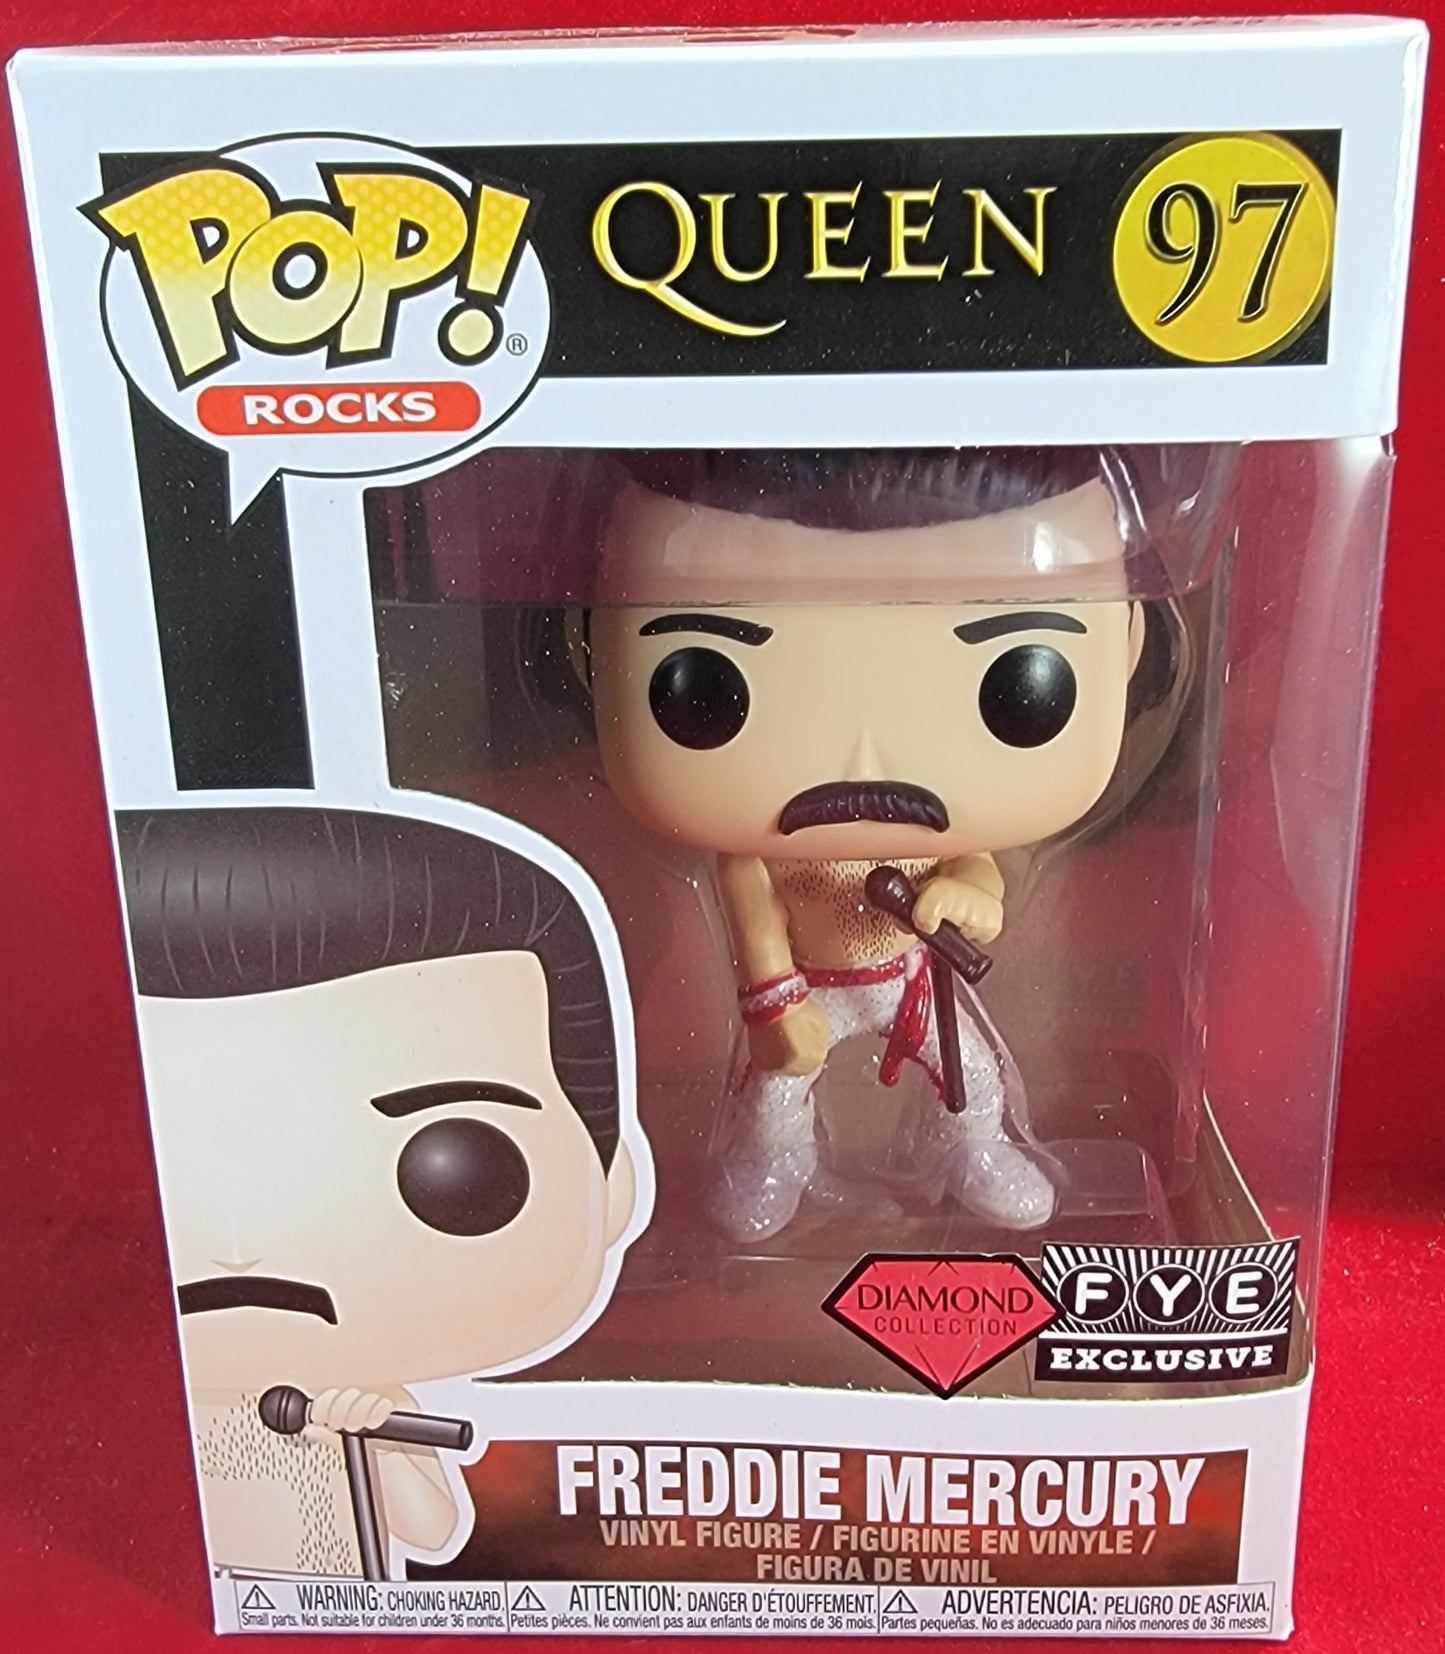 Freddie mercury fye exclusive funko # 97 (nib)